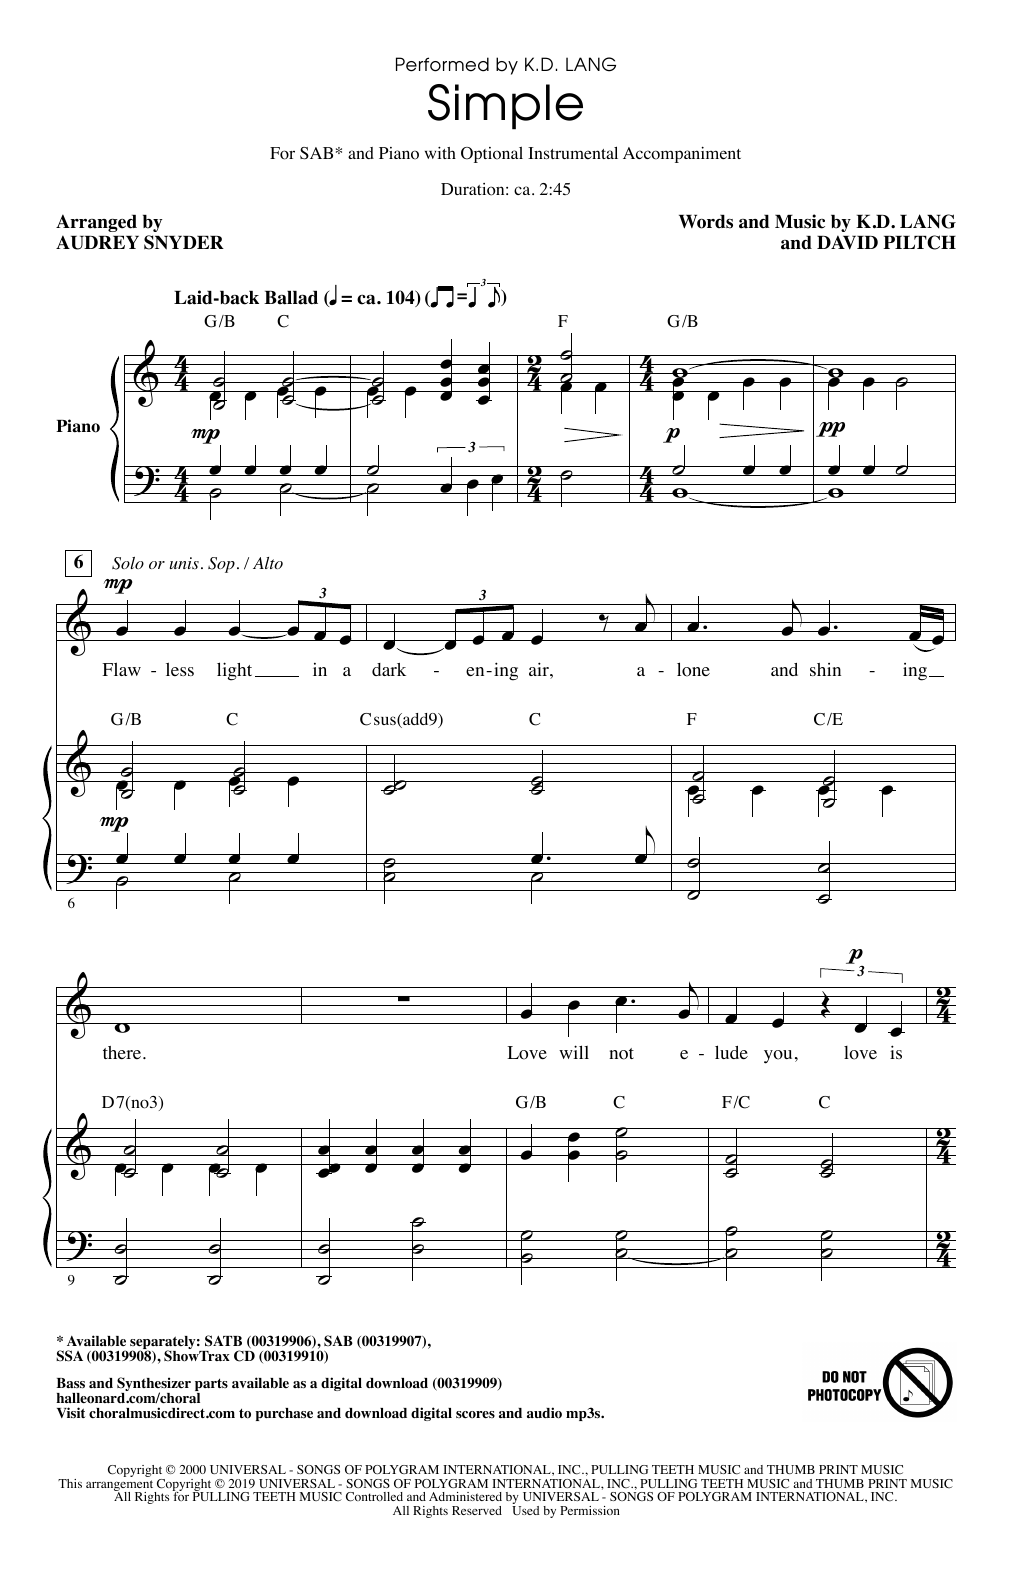 k.d. lang Simple (arr. Audrey Snyder) Sheet Music Notes & Chords for SAB Choir - Download or Print PDF